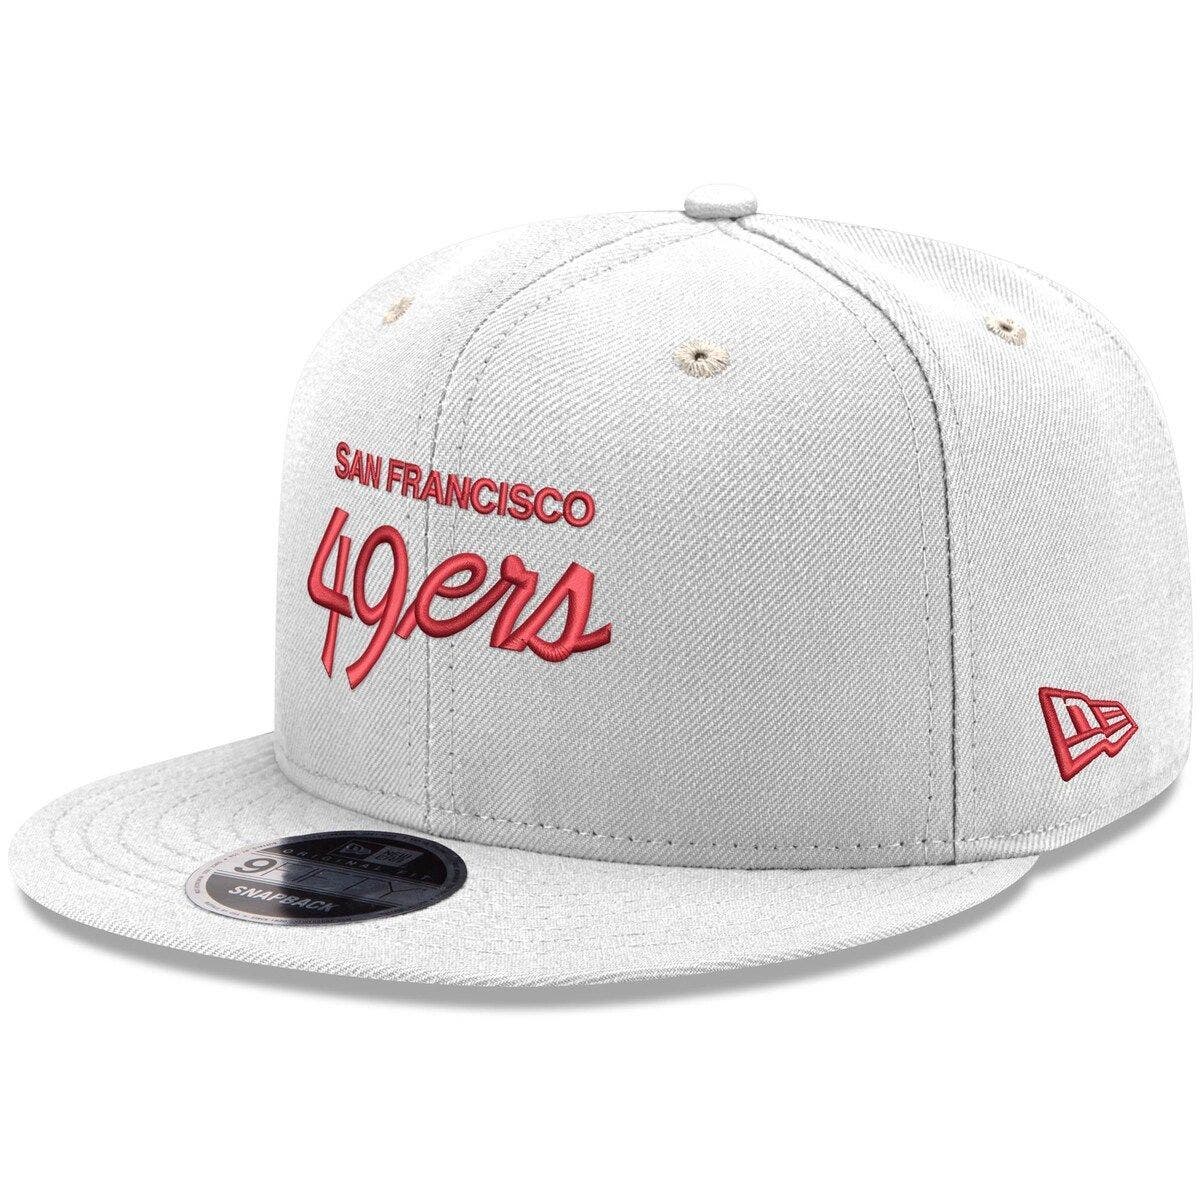 San Francisco Giants Americana 9FIFTY Snapback White Hat